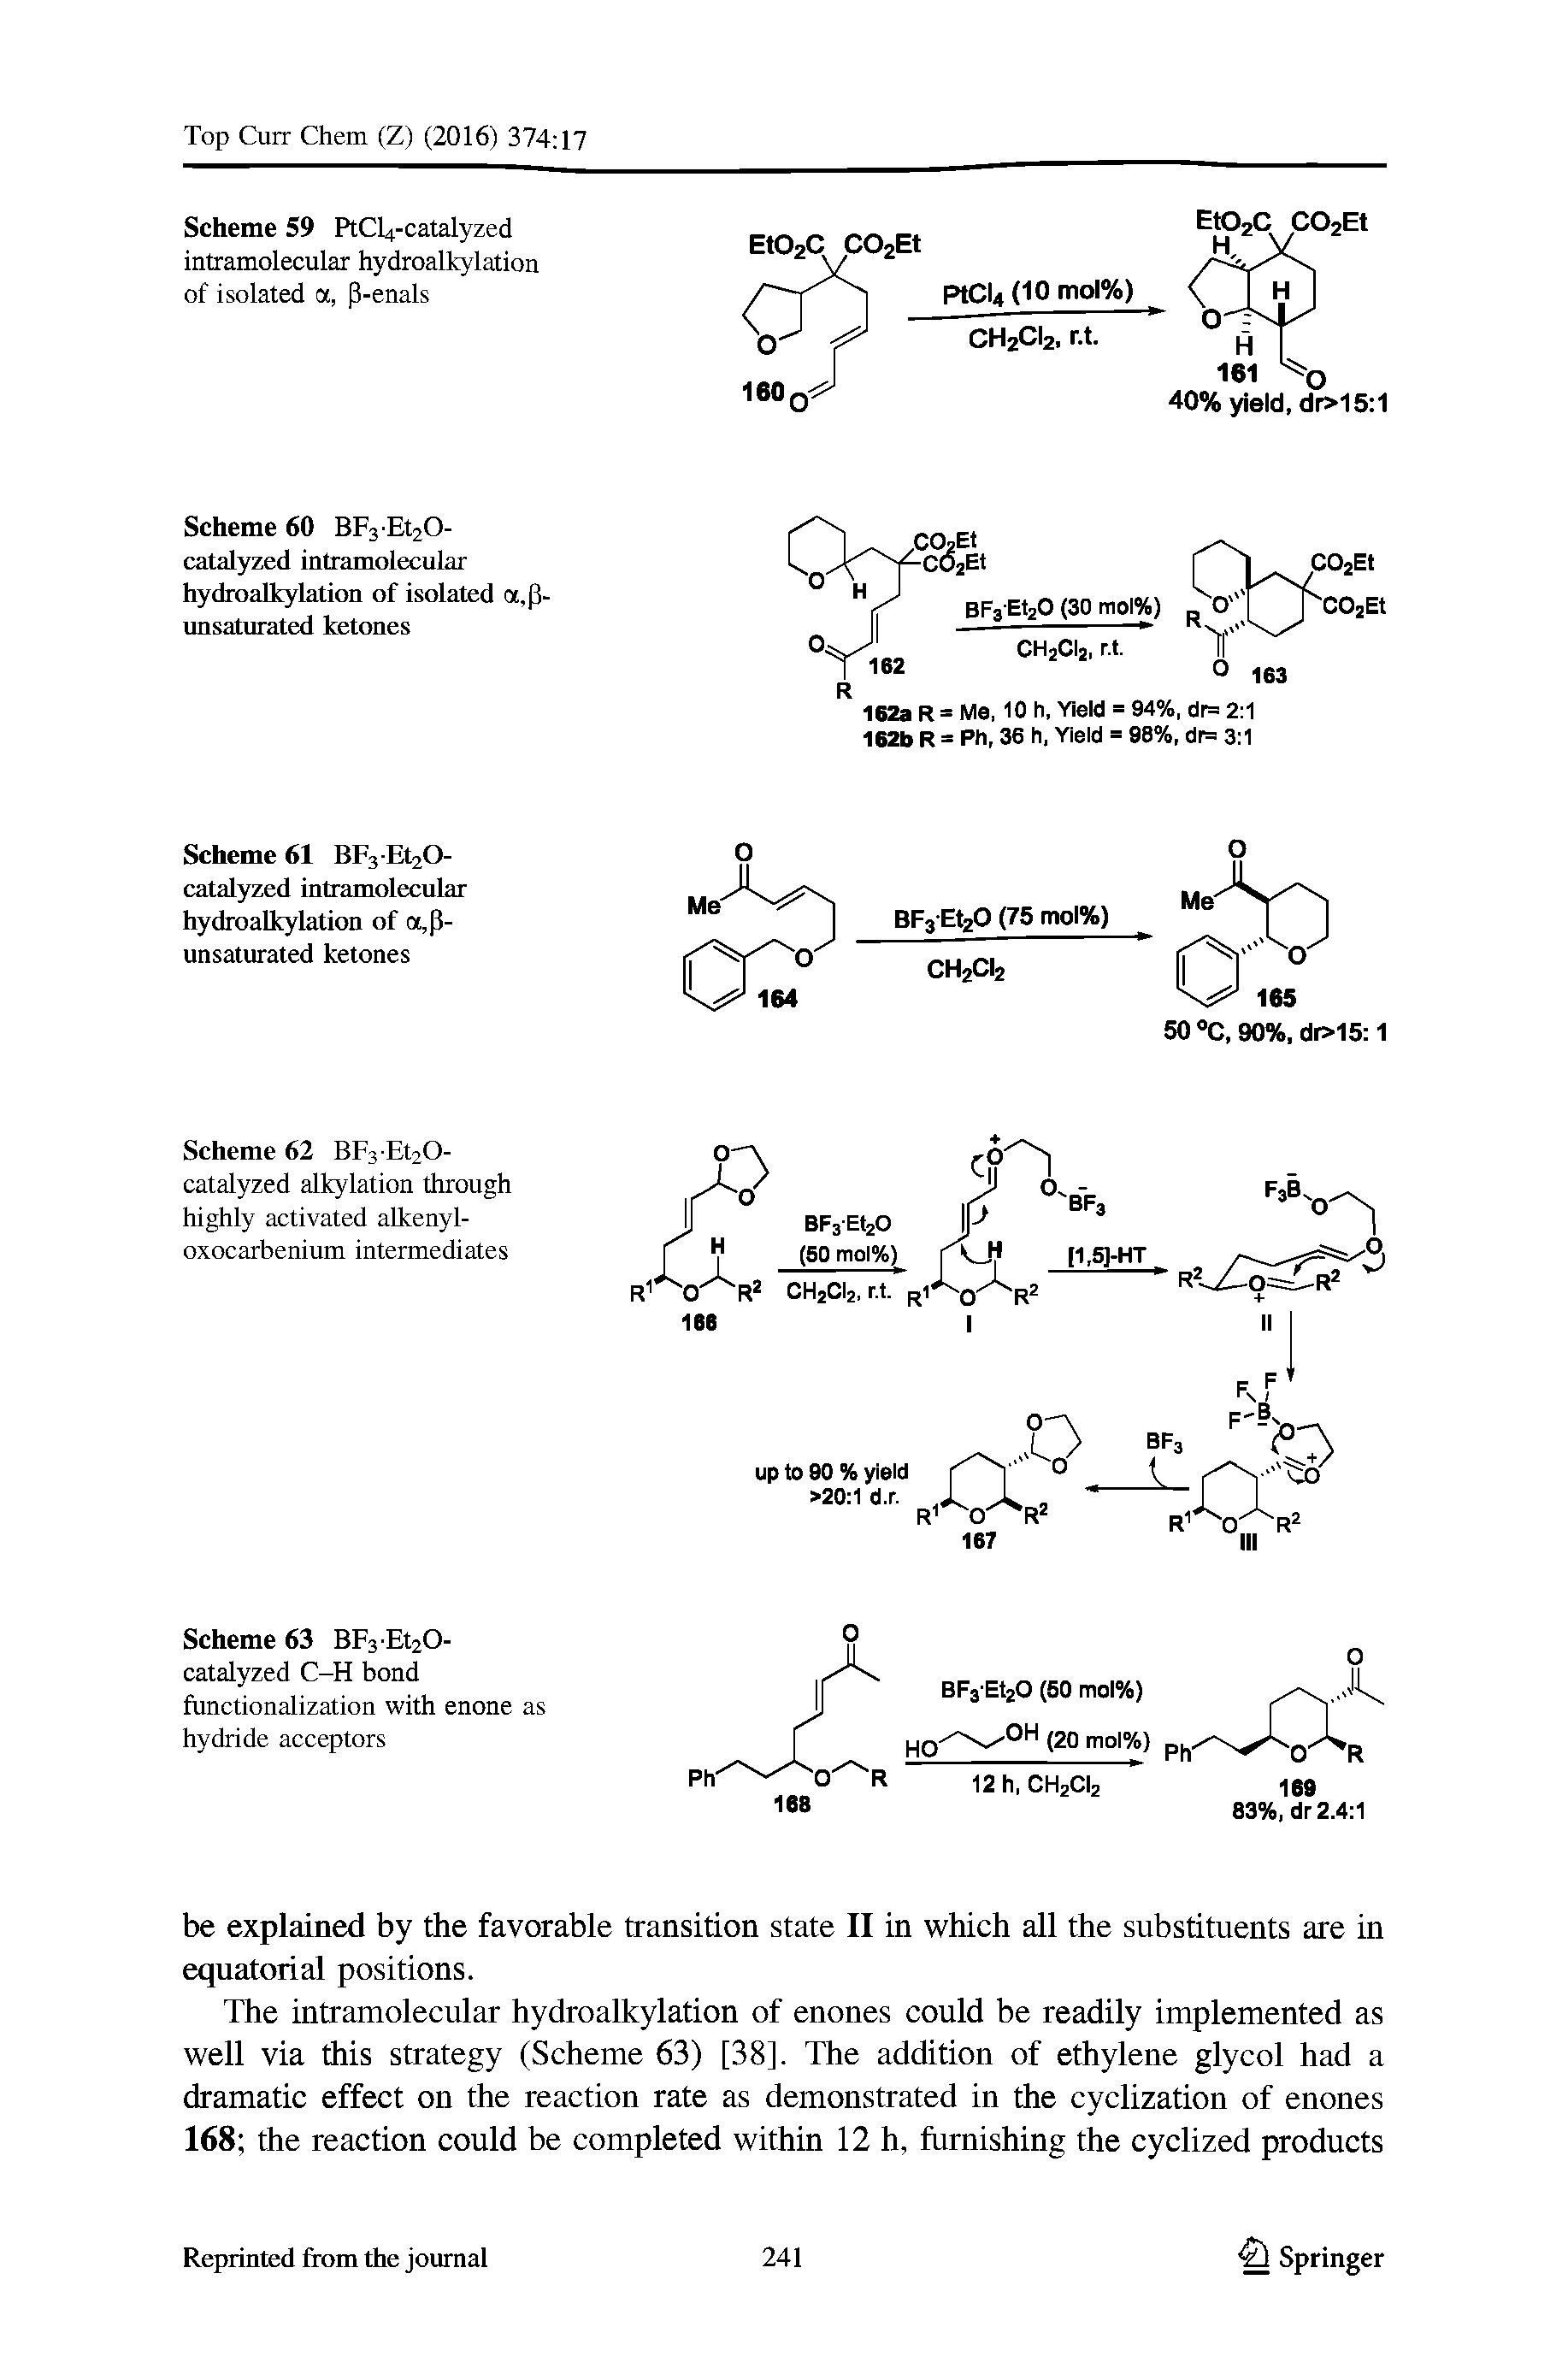 Scheme 62 BF3-Et20-catalyzed alkylation through highly activated alkenyl-oxocarbenium intermediates...